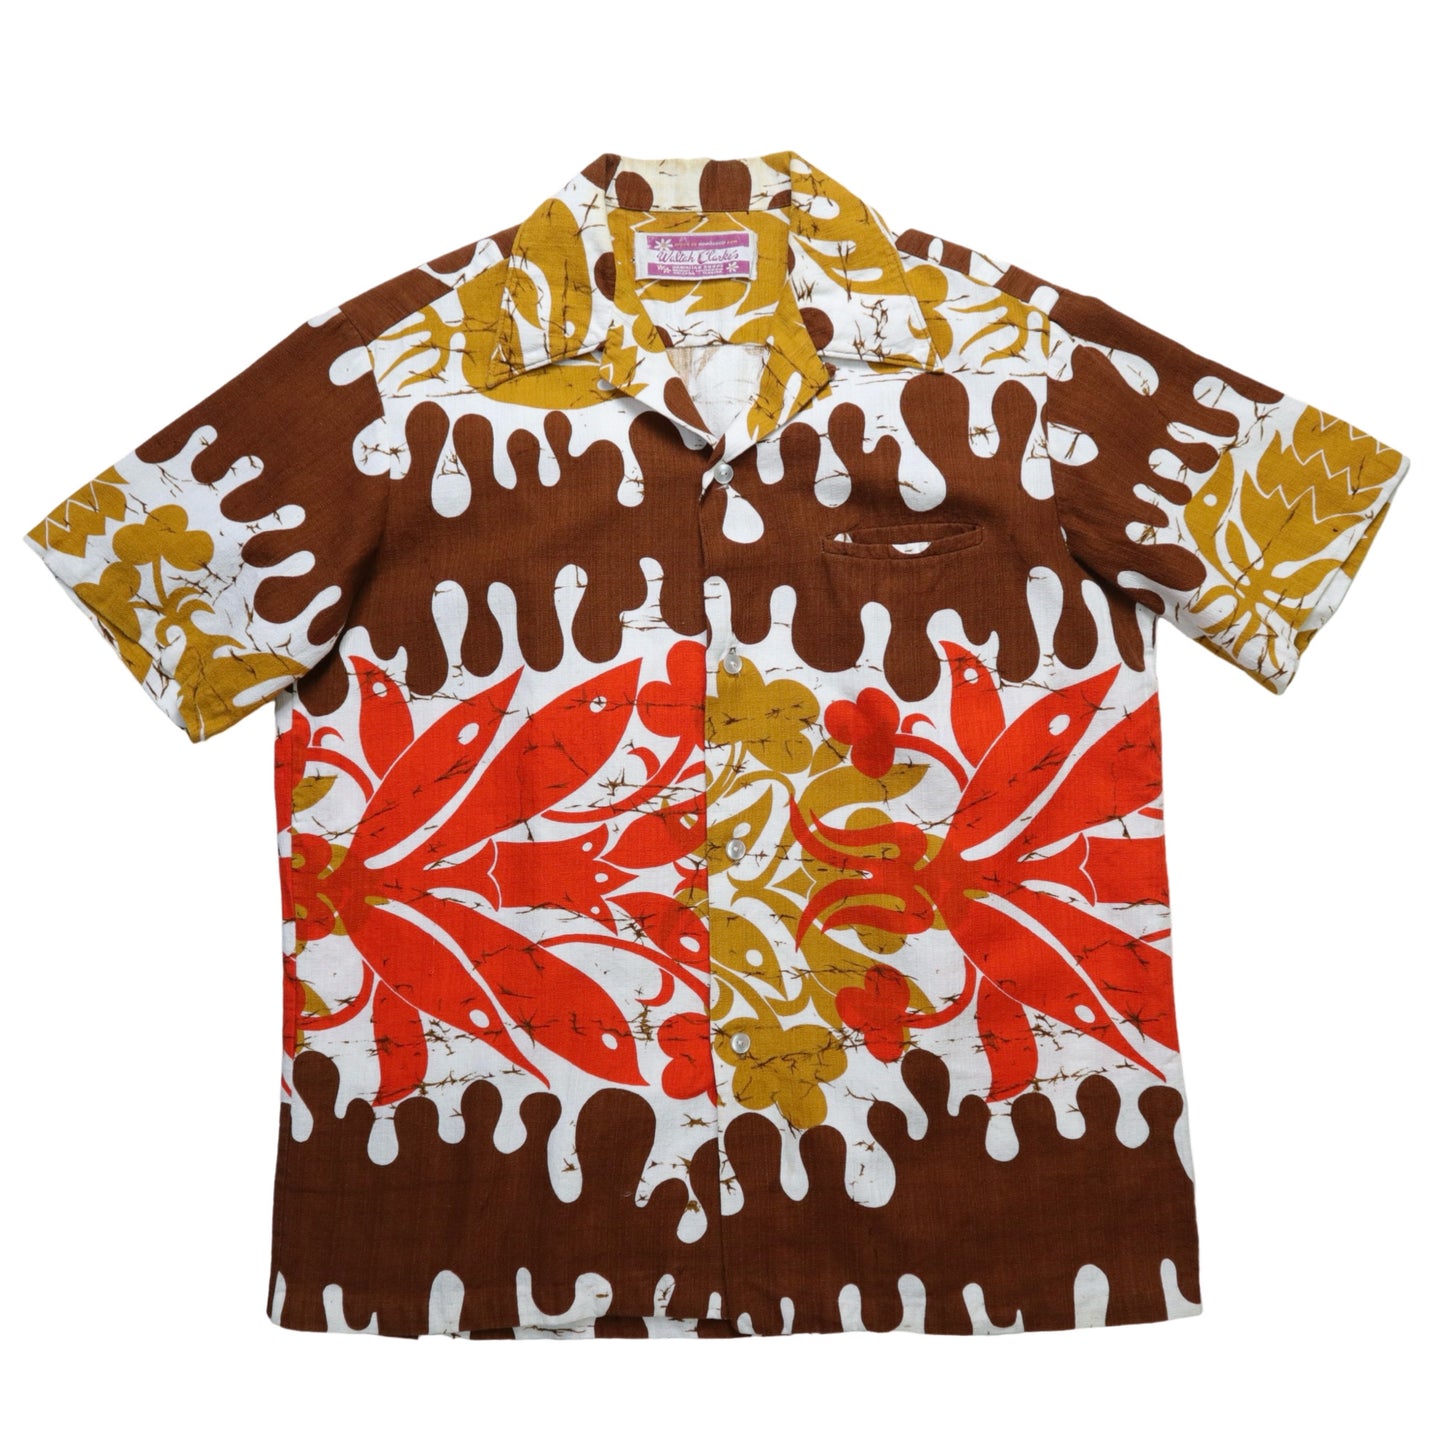 60s Waltah Clarke's
印花幾何圖樹皮棉夏威夷襯衫